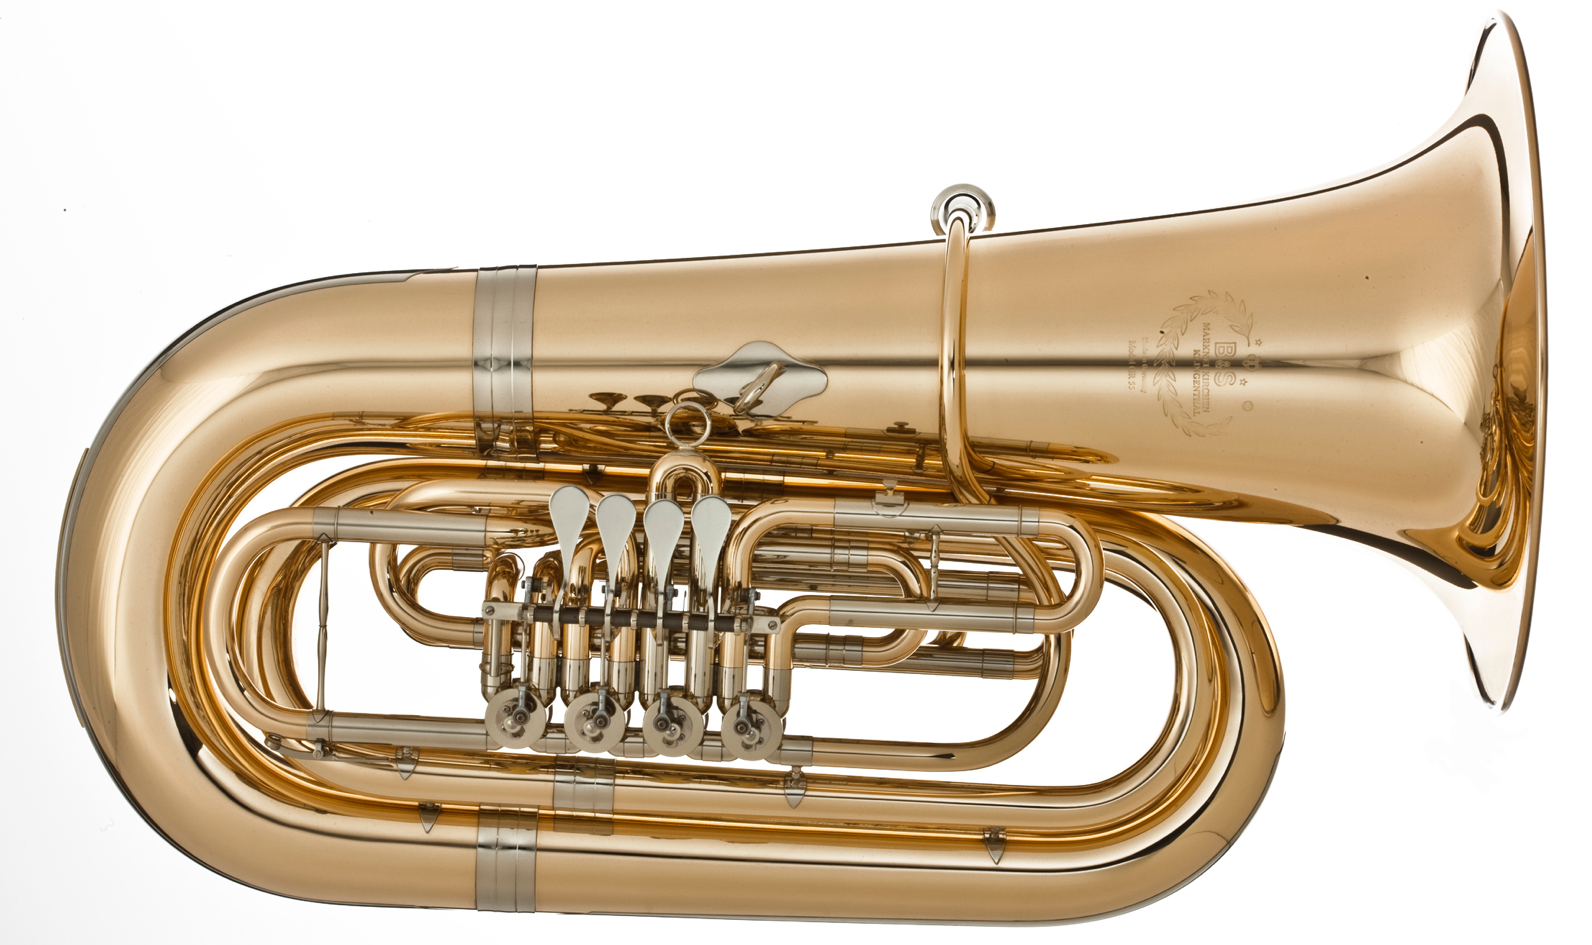 b&s gr55 是一款引人注目的 5/4 大小的 bbb 调黄铜铜管乐器.